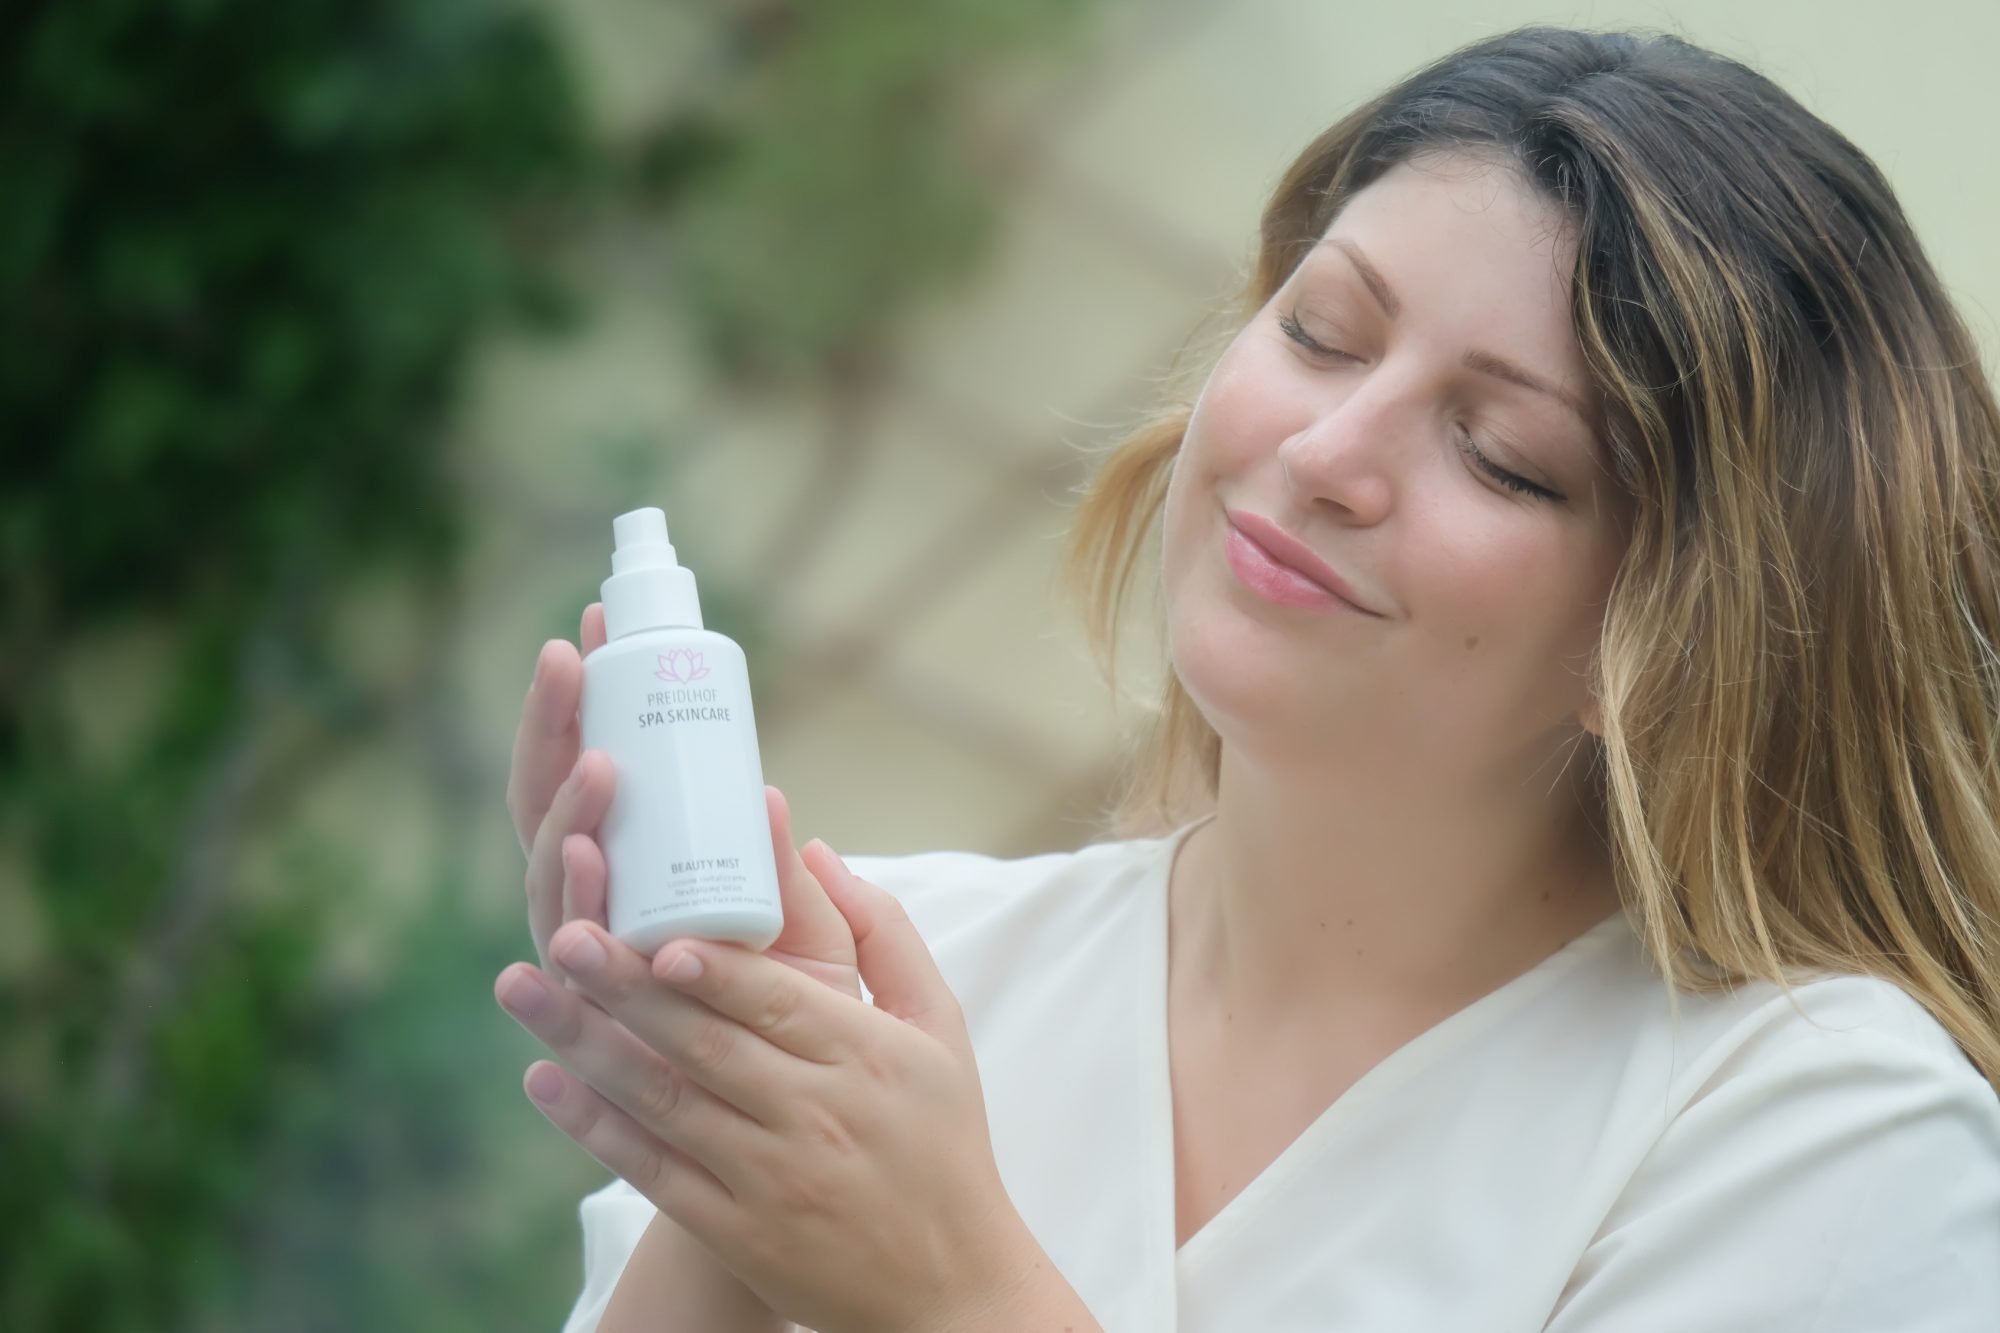 Preidlhof Spa Skincare linea cosmetica clean vegan essenziale